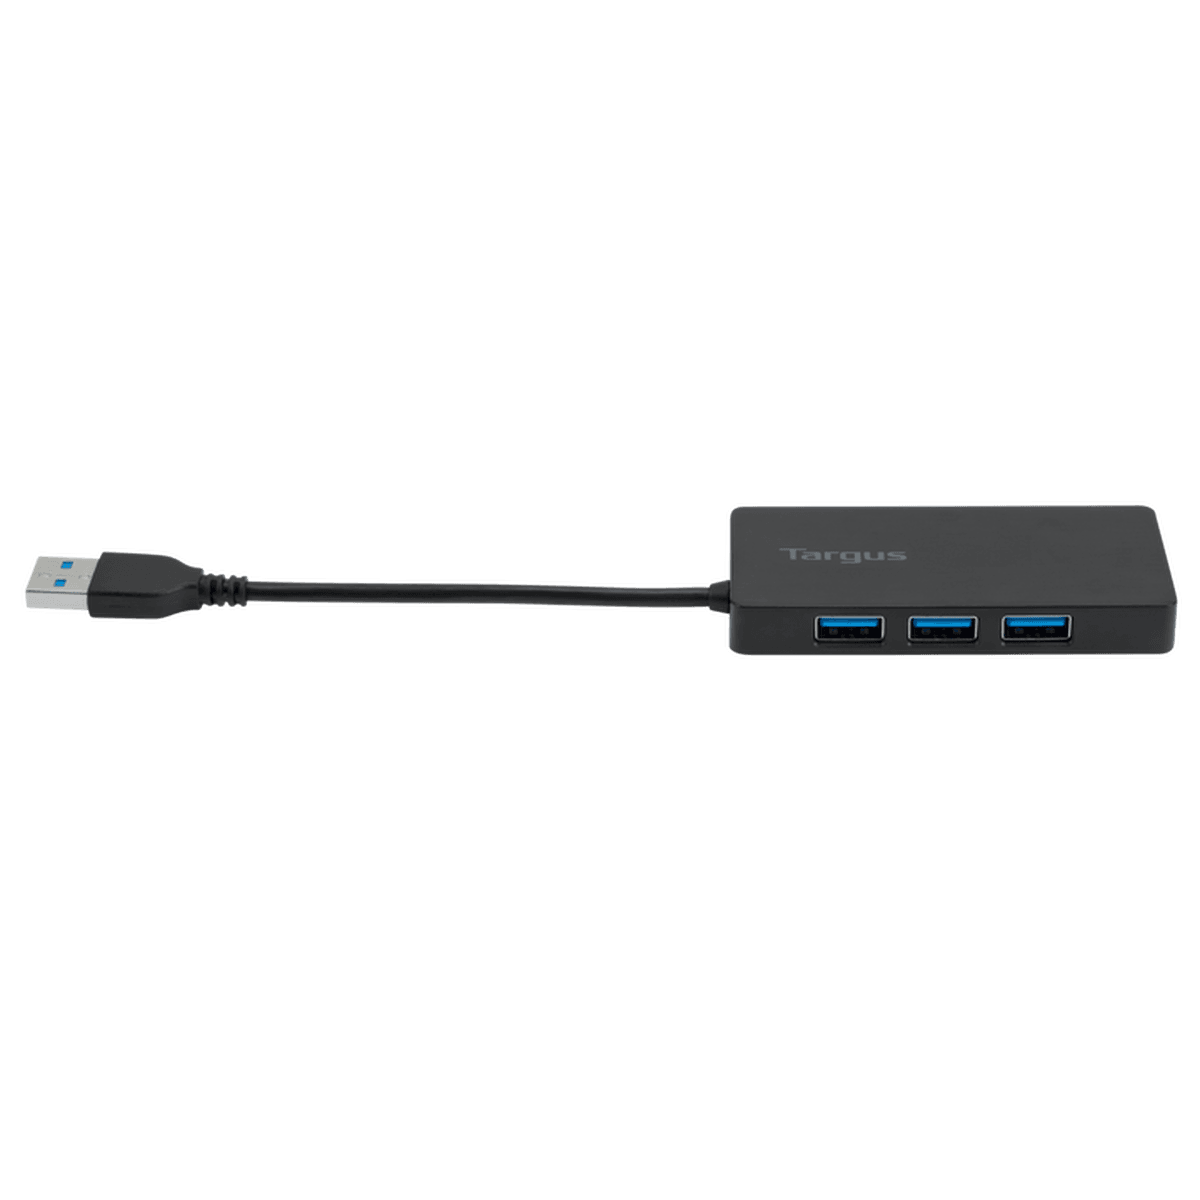 USB-C Multi-Port Hub with Card Reader and 100W PD Pass-Thru ACA952USZ